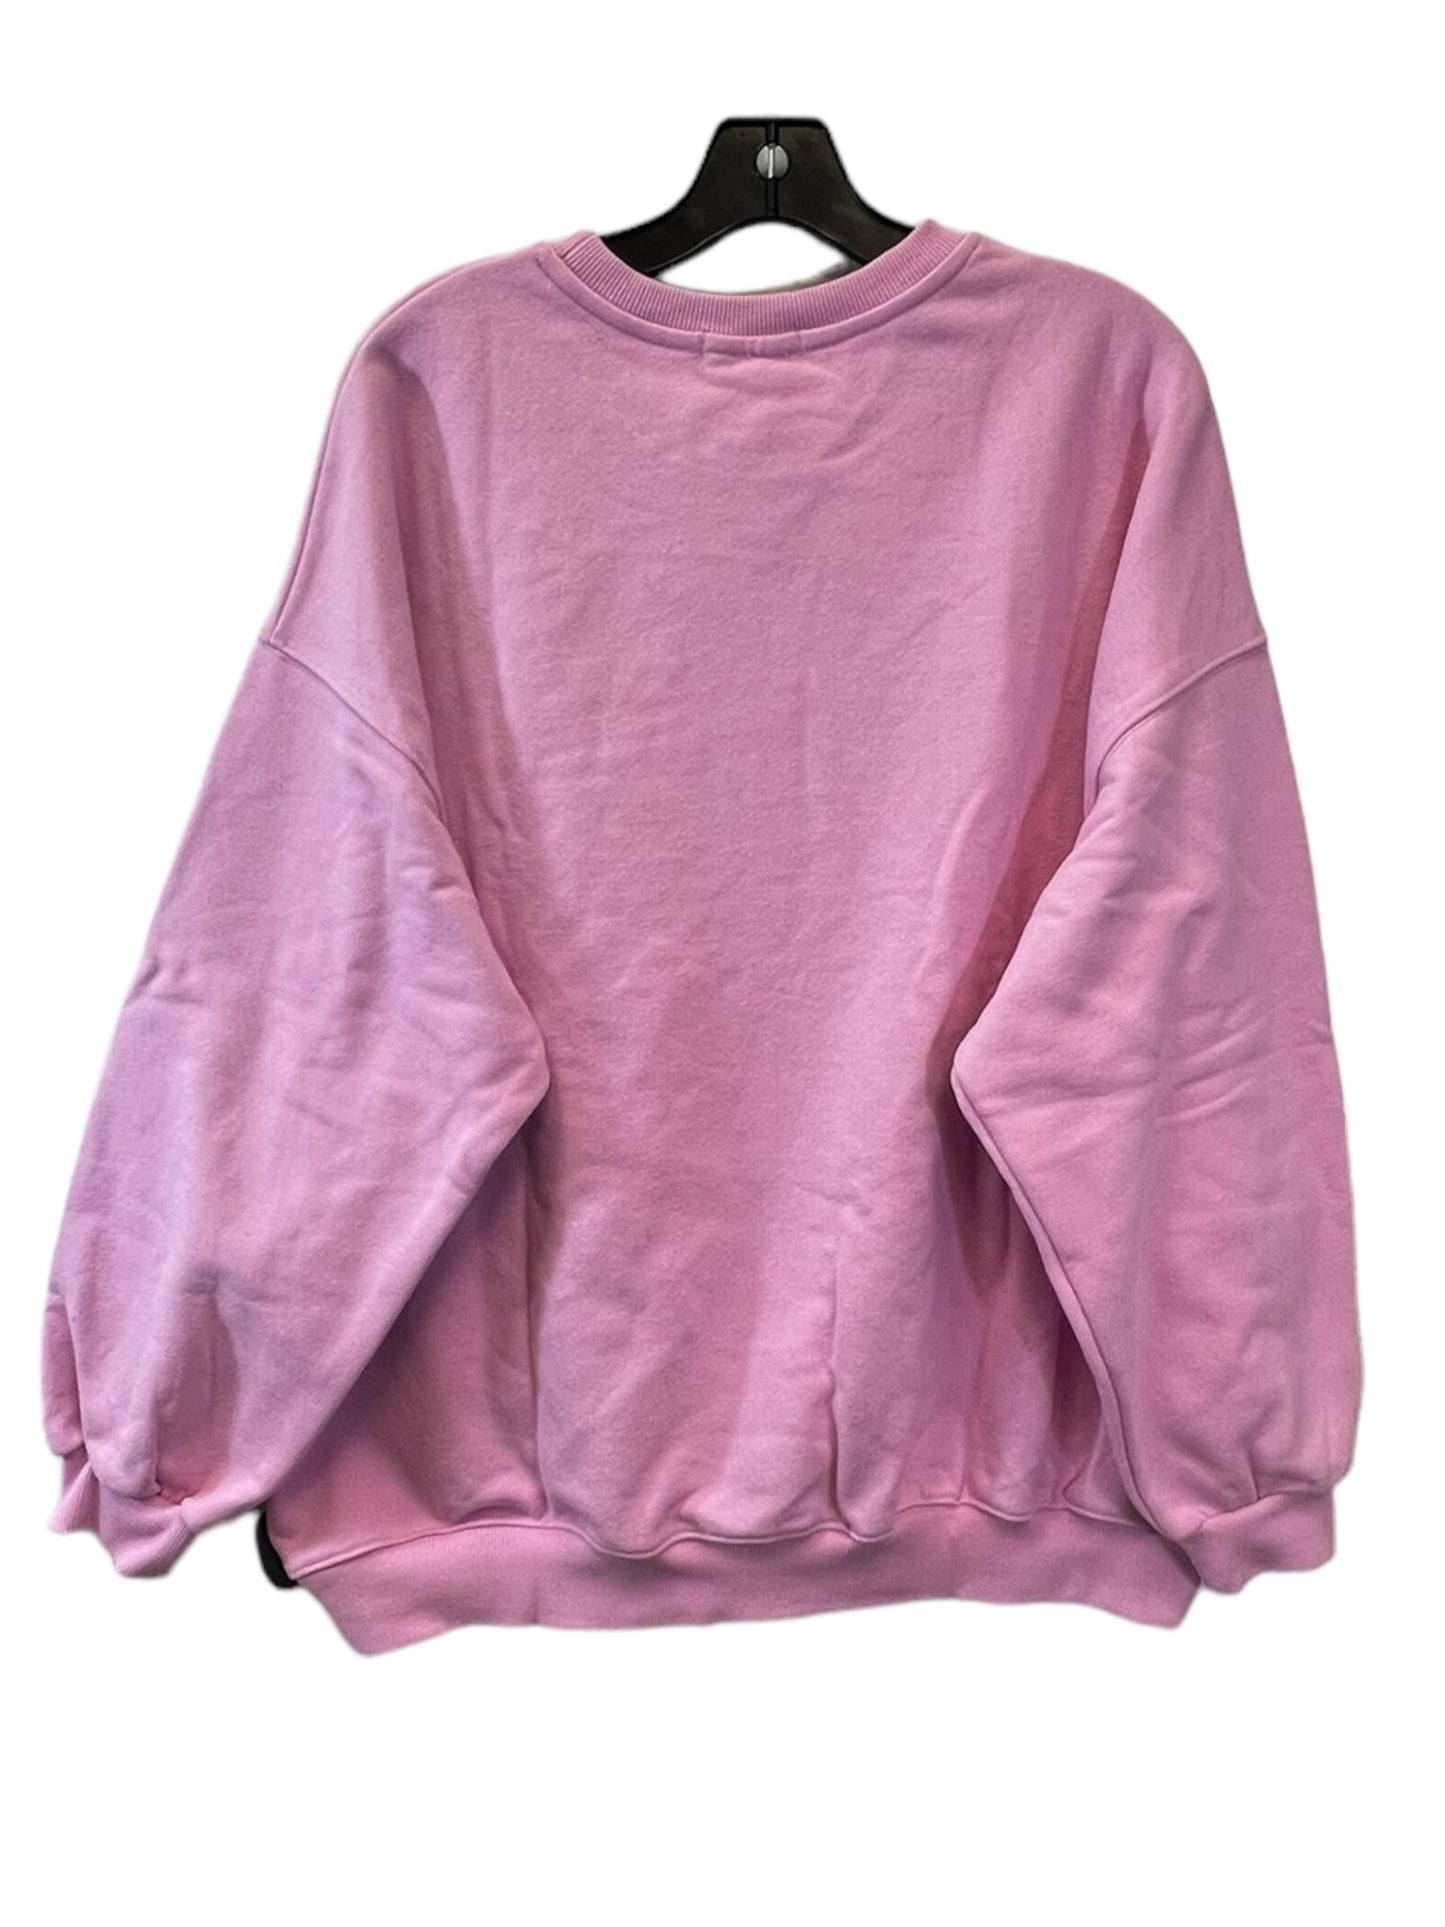 Pink Sweatshirt Crewneck Clothes Mentor, Size M